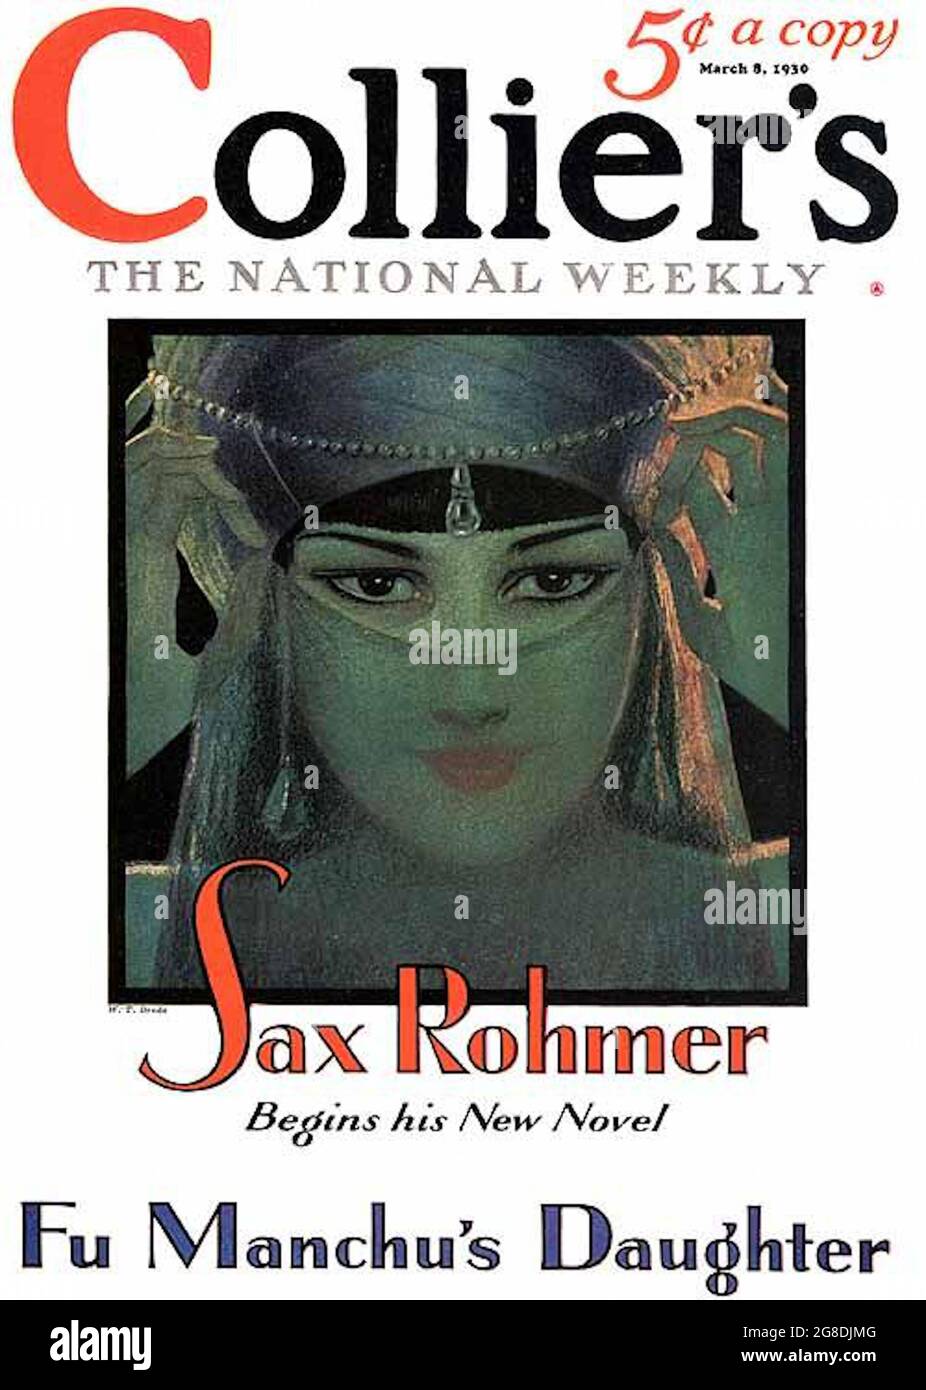 Władysław Teodor Benda magazine cover design - Collier's The National Weekly - Sax Rohmer Fu Manchu's Daughter. Stock Photo